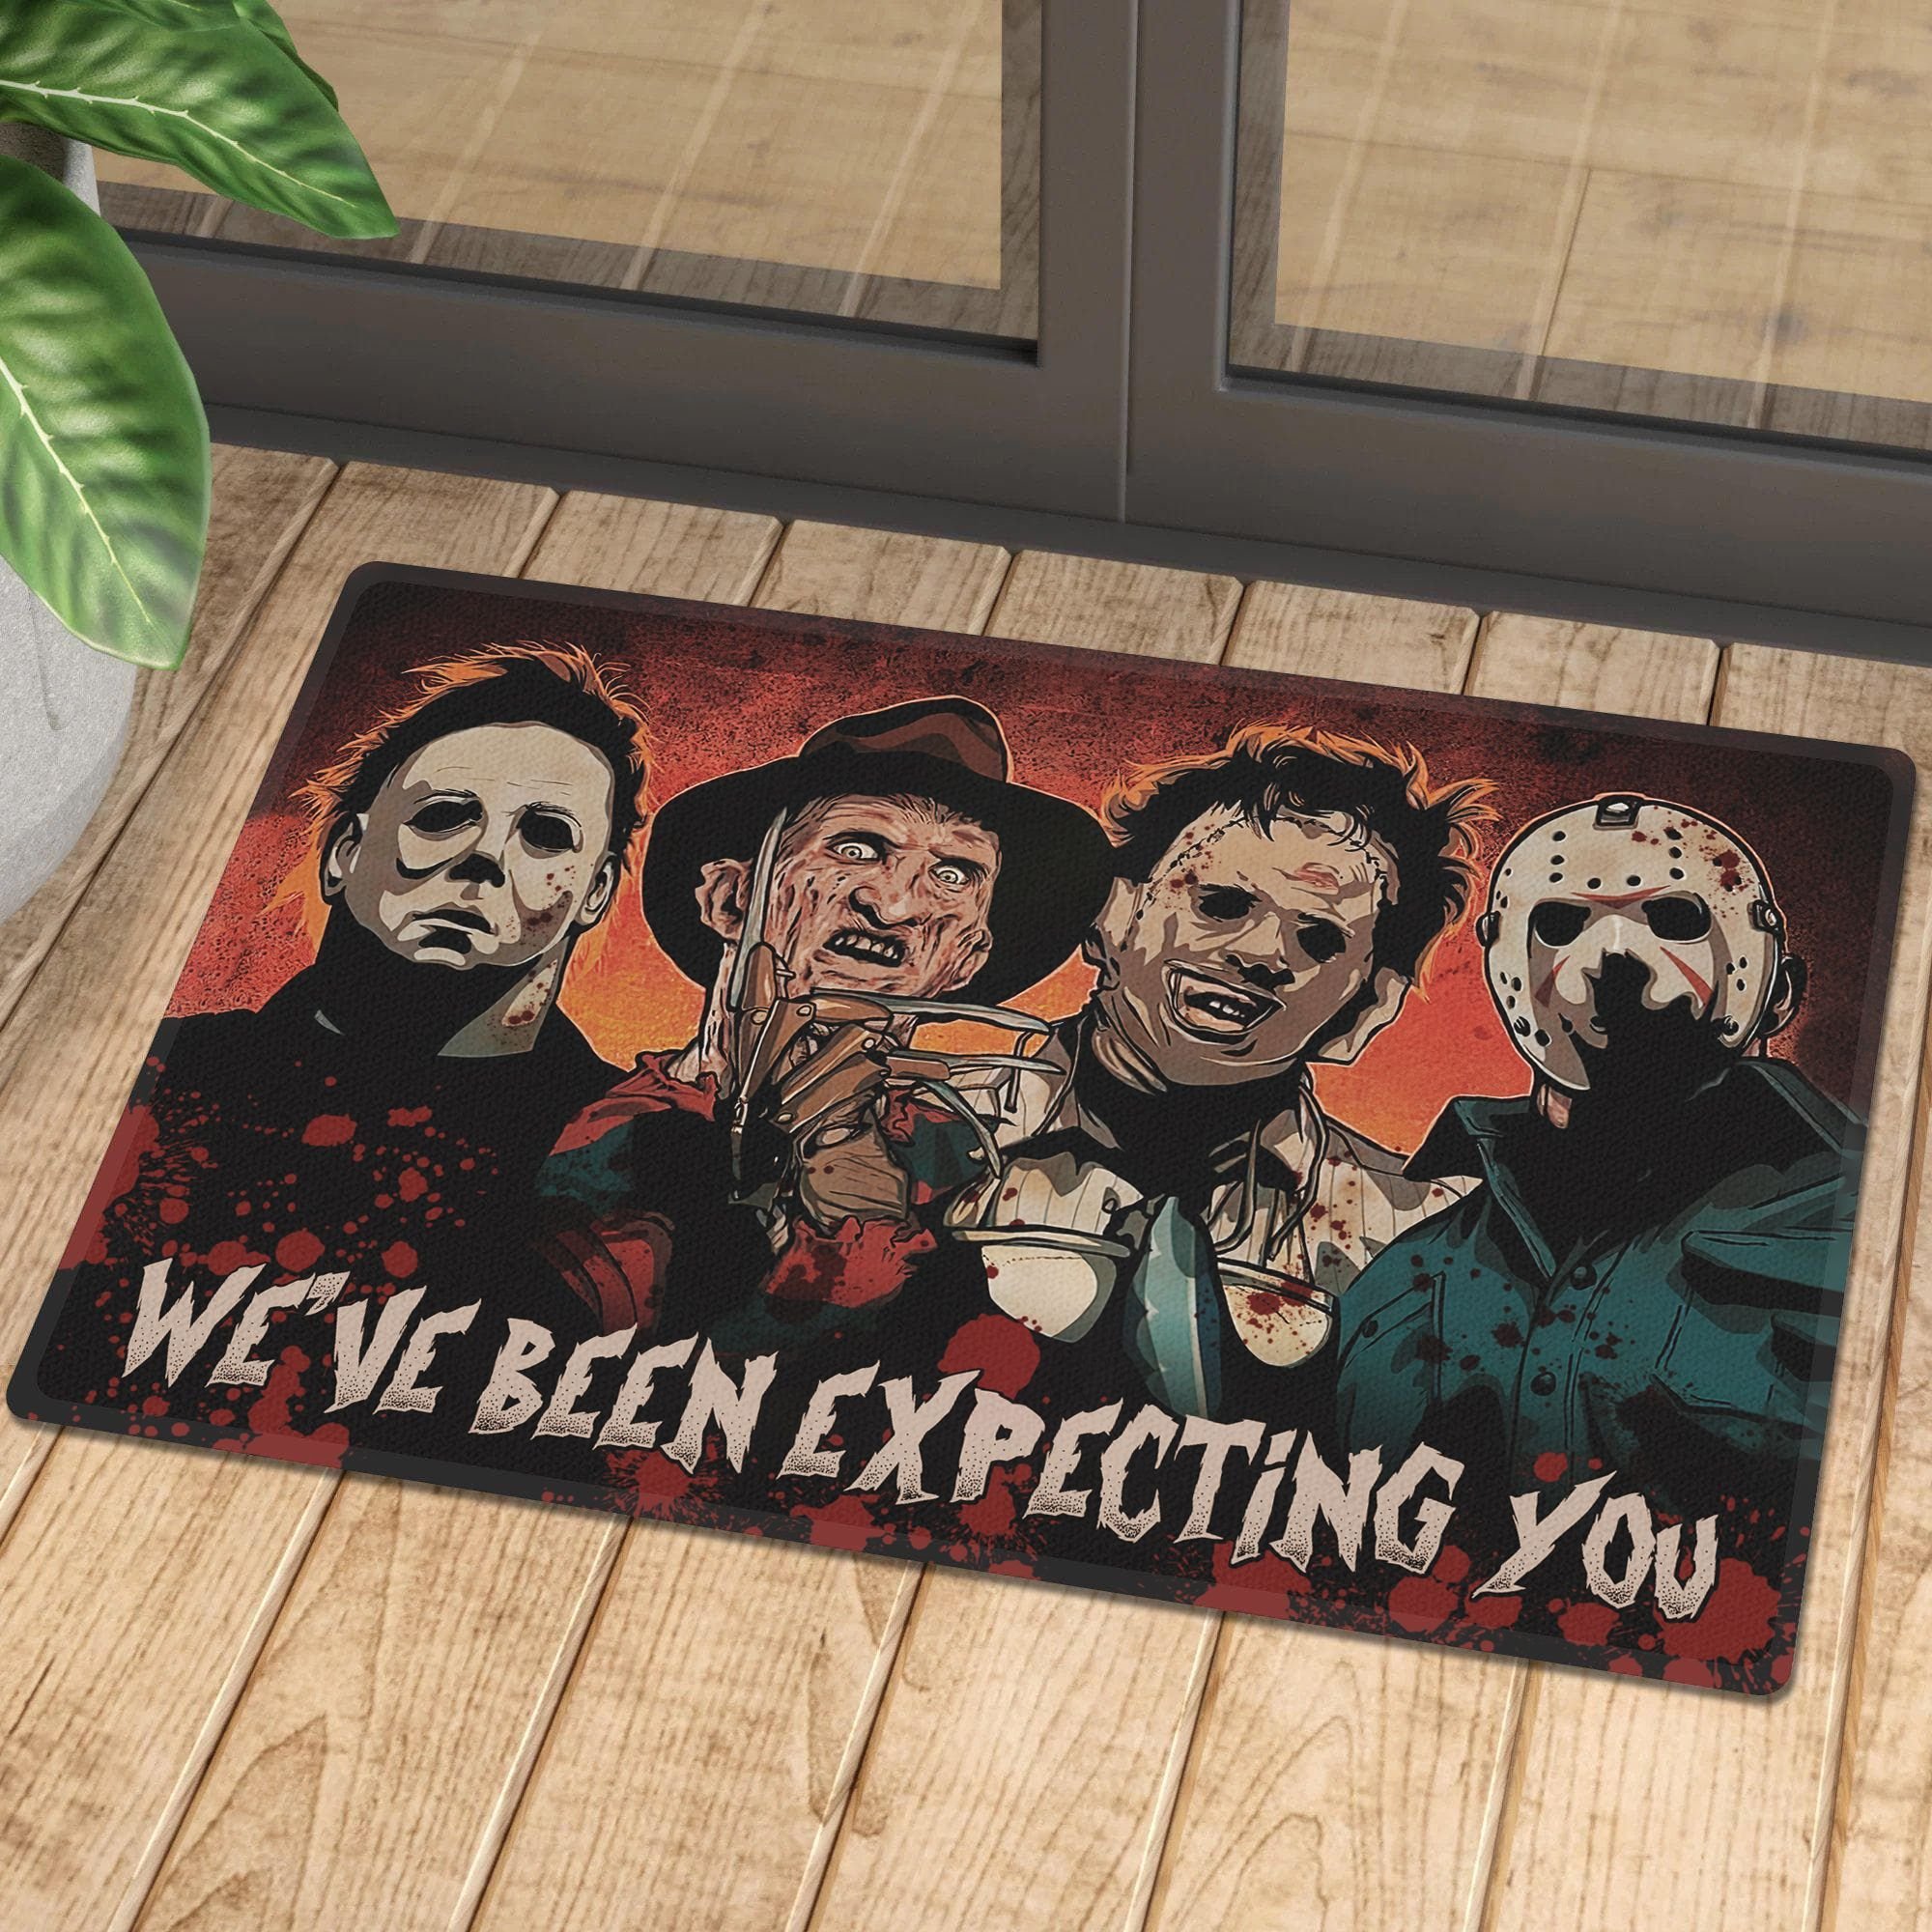 Horror characters we have been expecting You Doormat 2